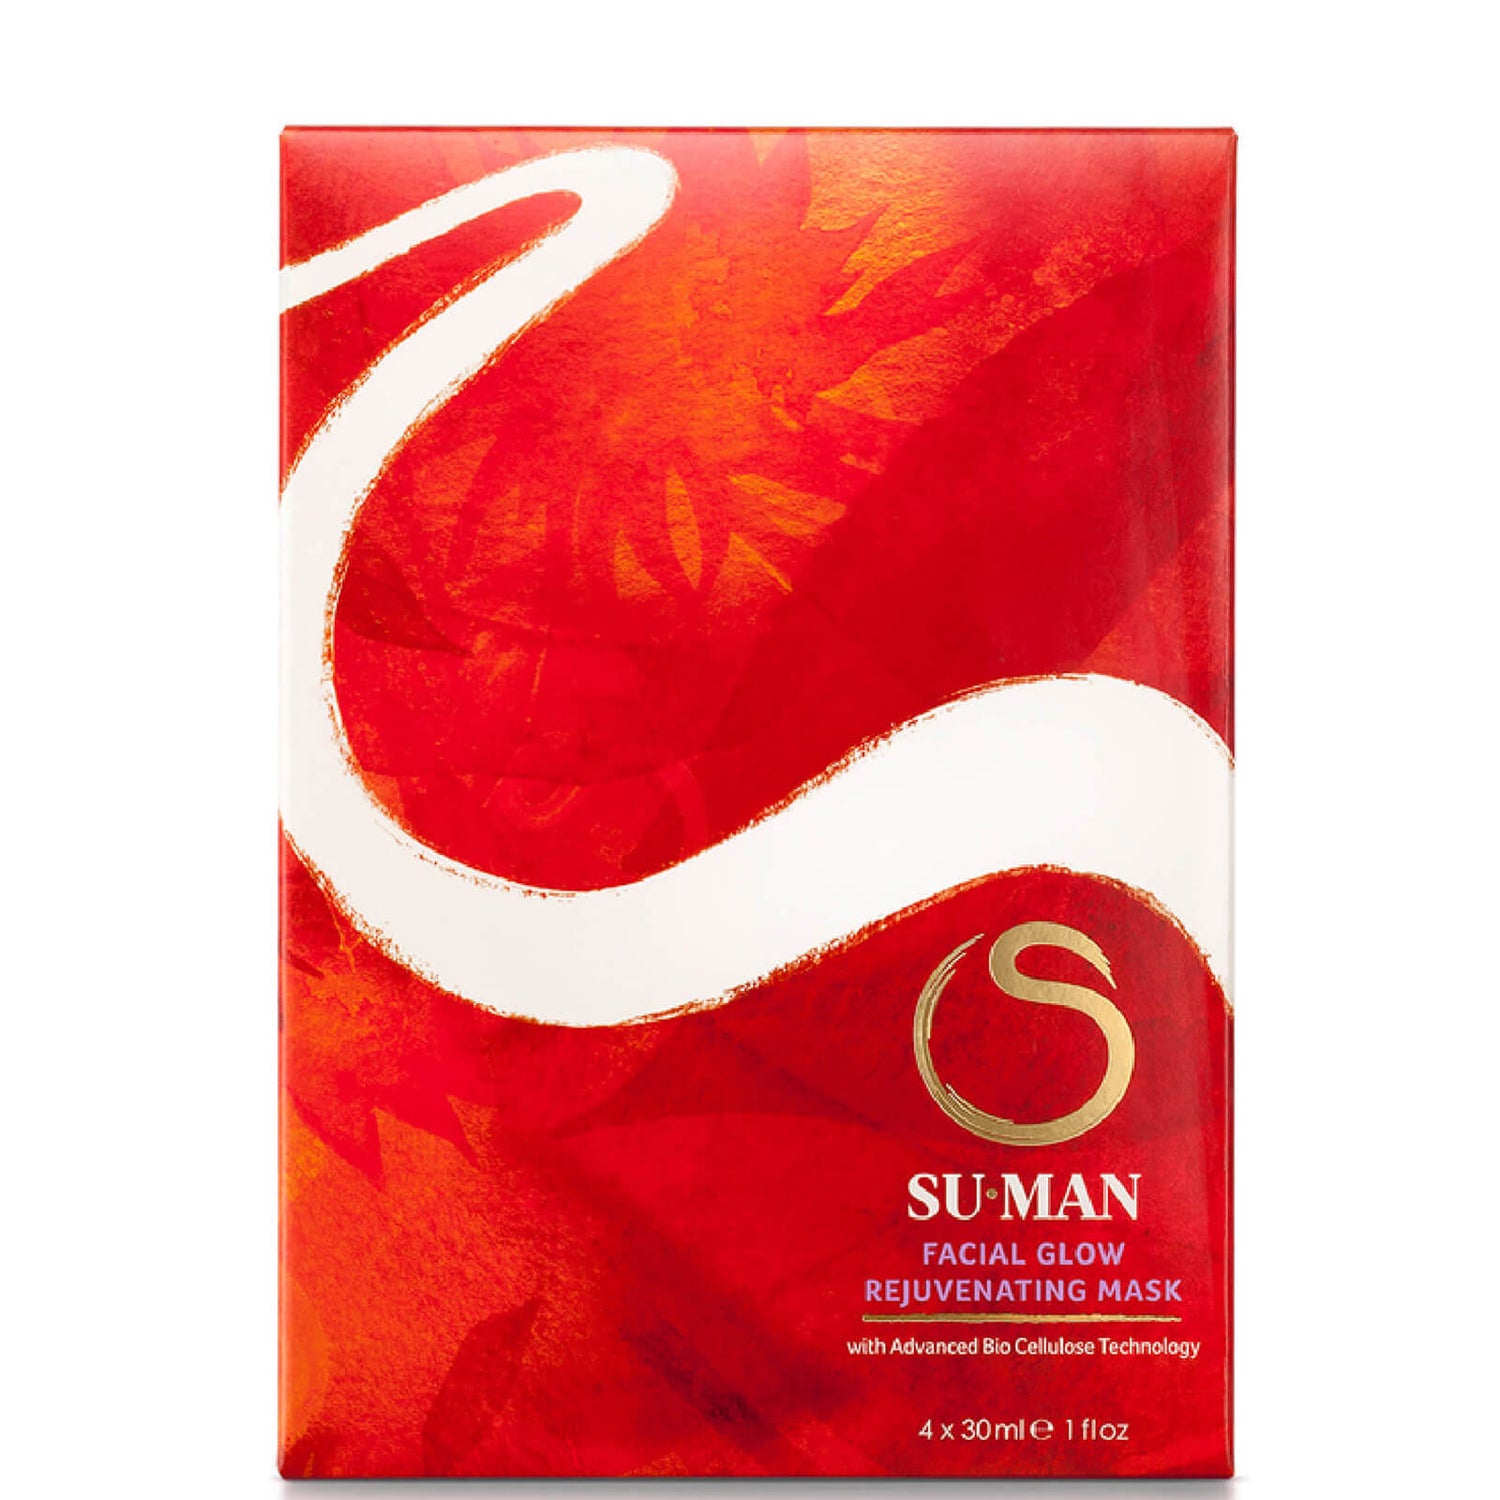 Su-Man Facial Glow Rejuvenating Mask(Su-Man 페이셜 글로우 리쥬비네이팅 마스크 - 4x30ml)